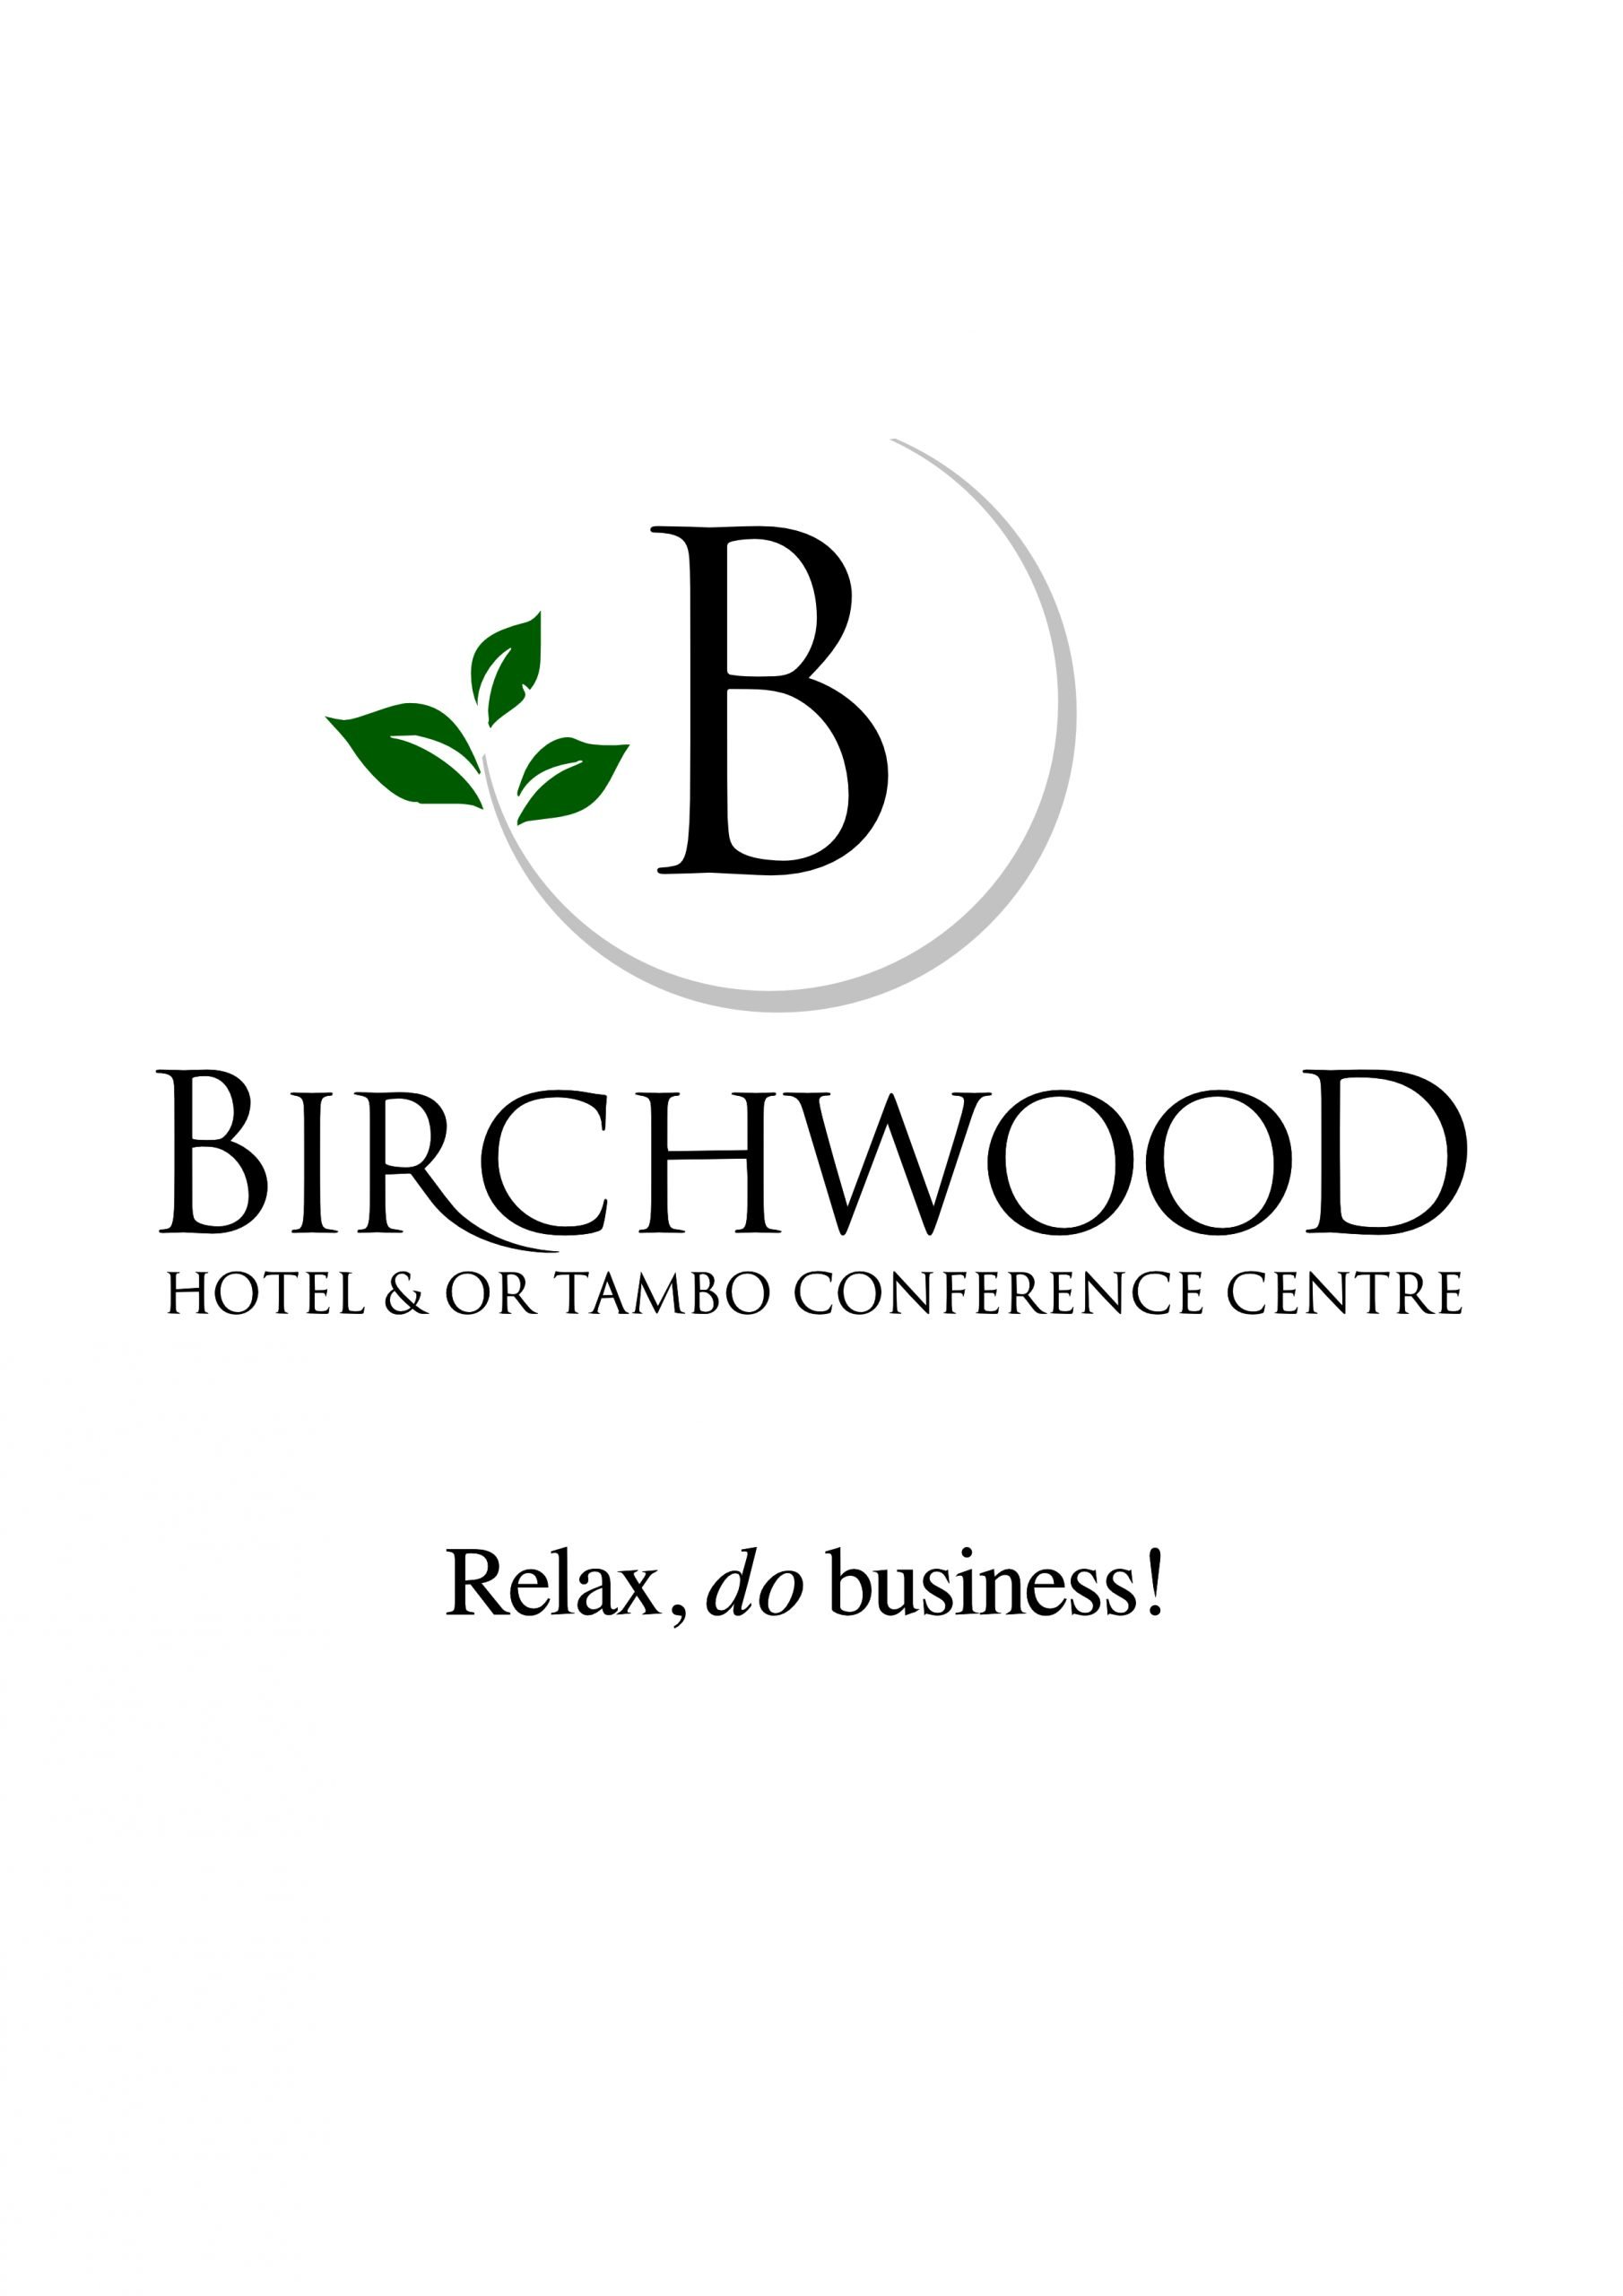 Birchwood-Logo-JPEGr-scaled.jpg